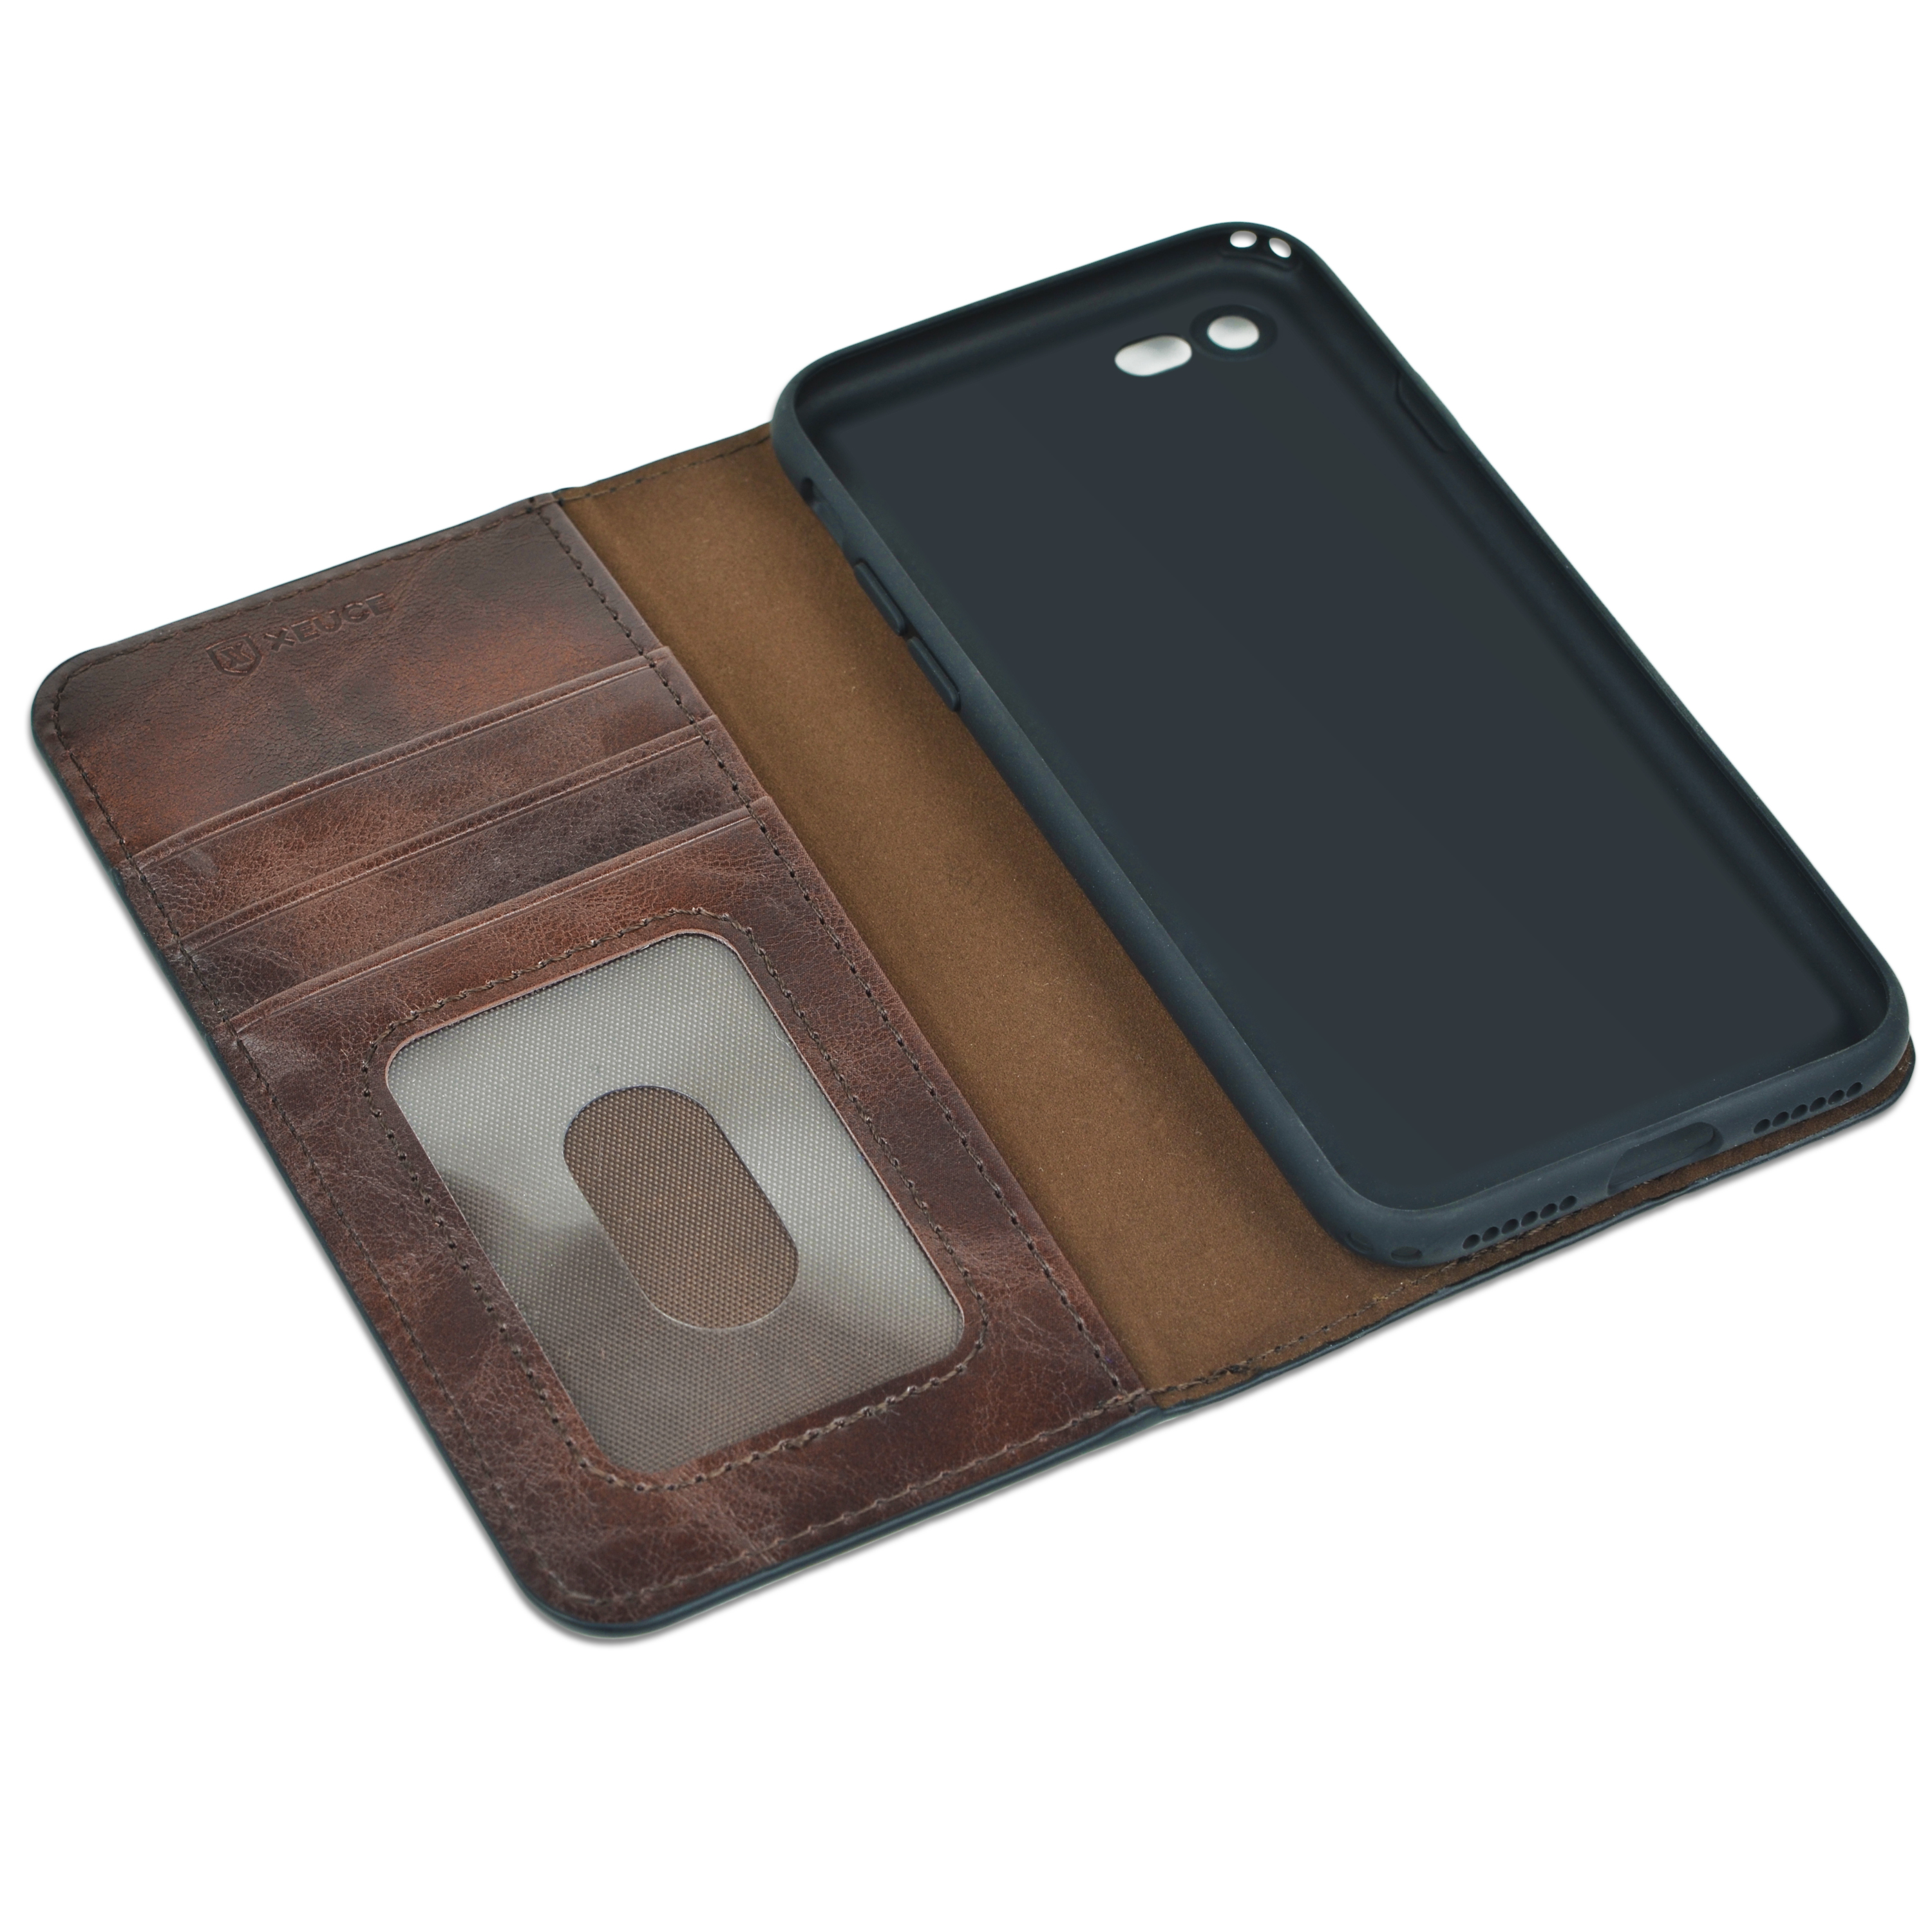 Shop New XEUCE iPhone 7 / iPhone 8 Folio Wallet Case (Black/Brown) Magnetic Flip Case w ...